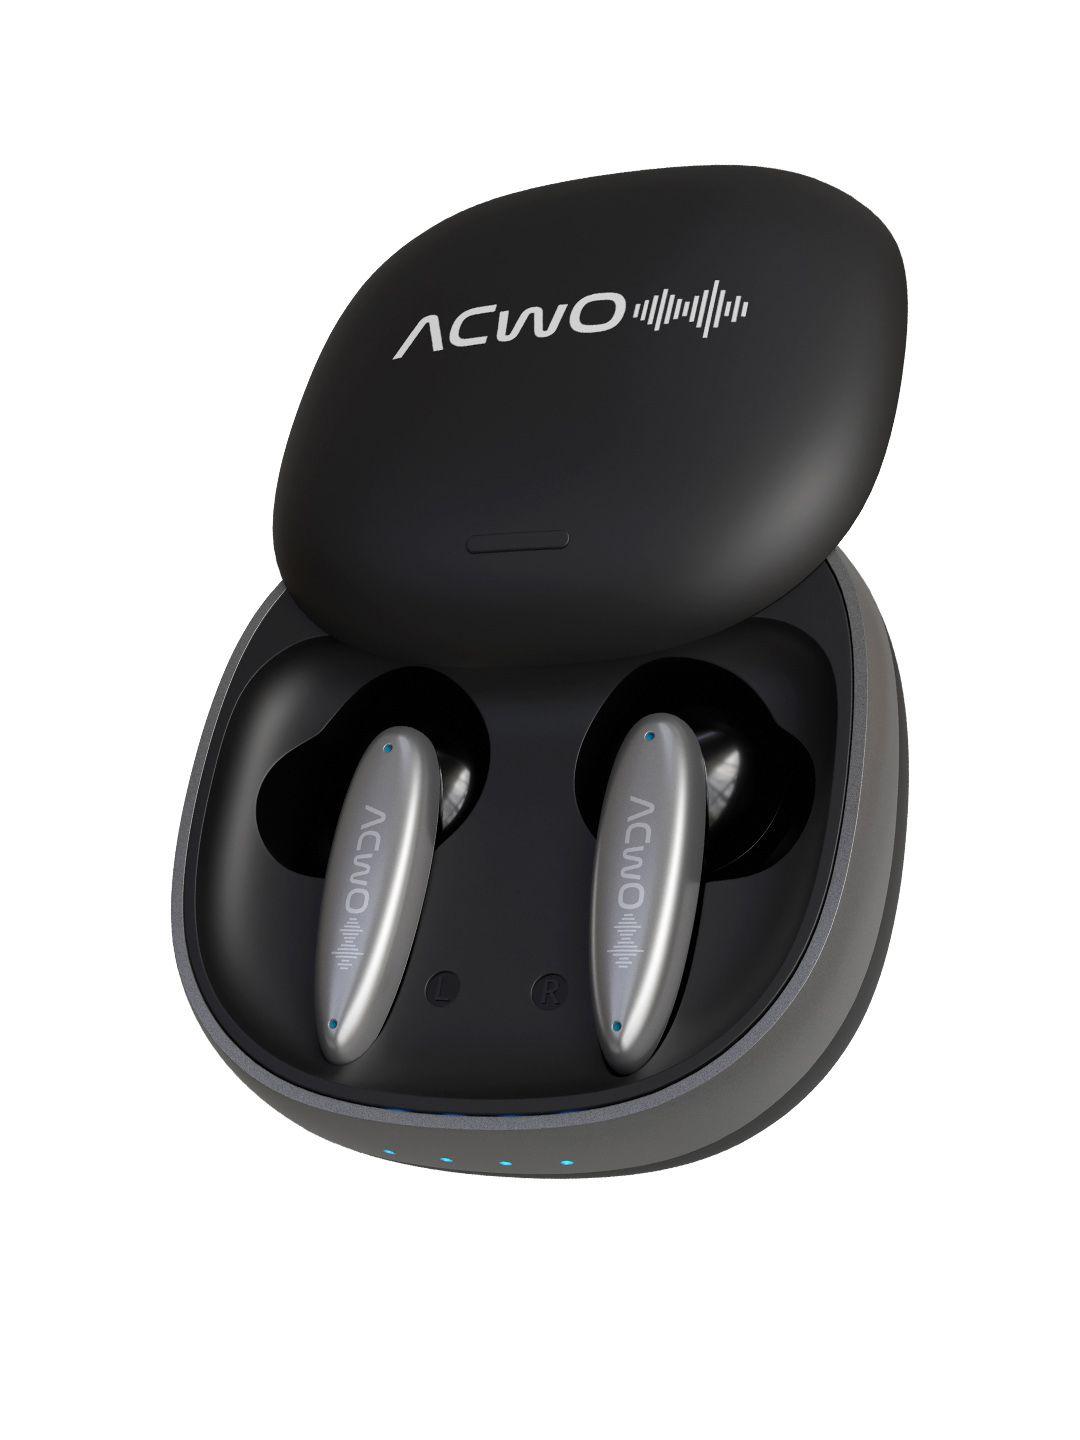 acwo dwots 717 wireless earbuds with dual enc & digital display